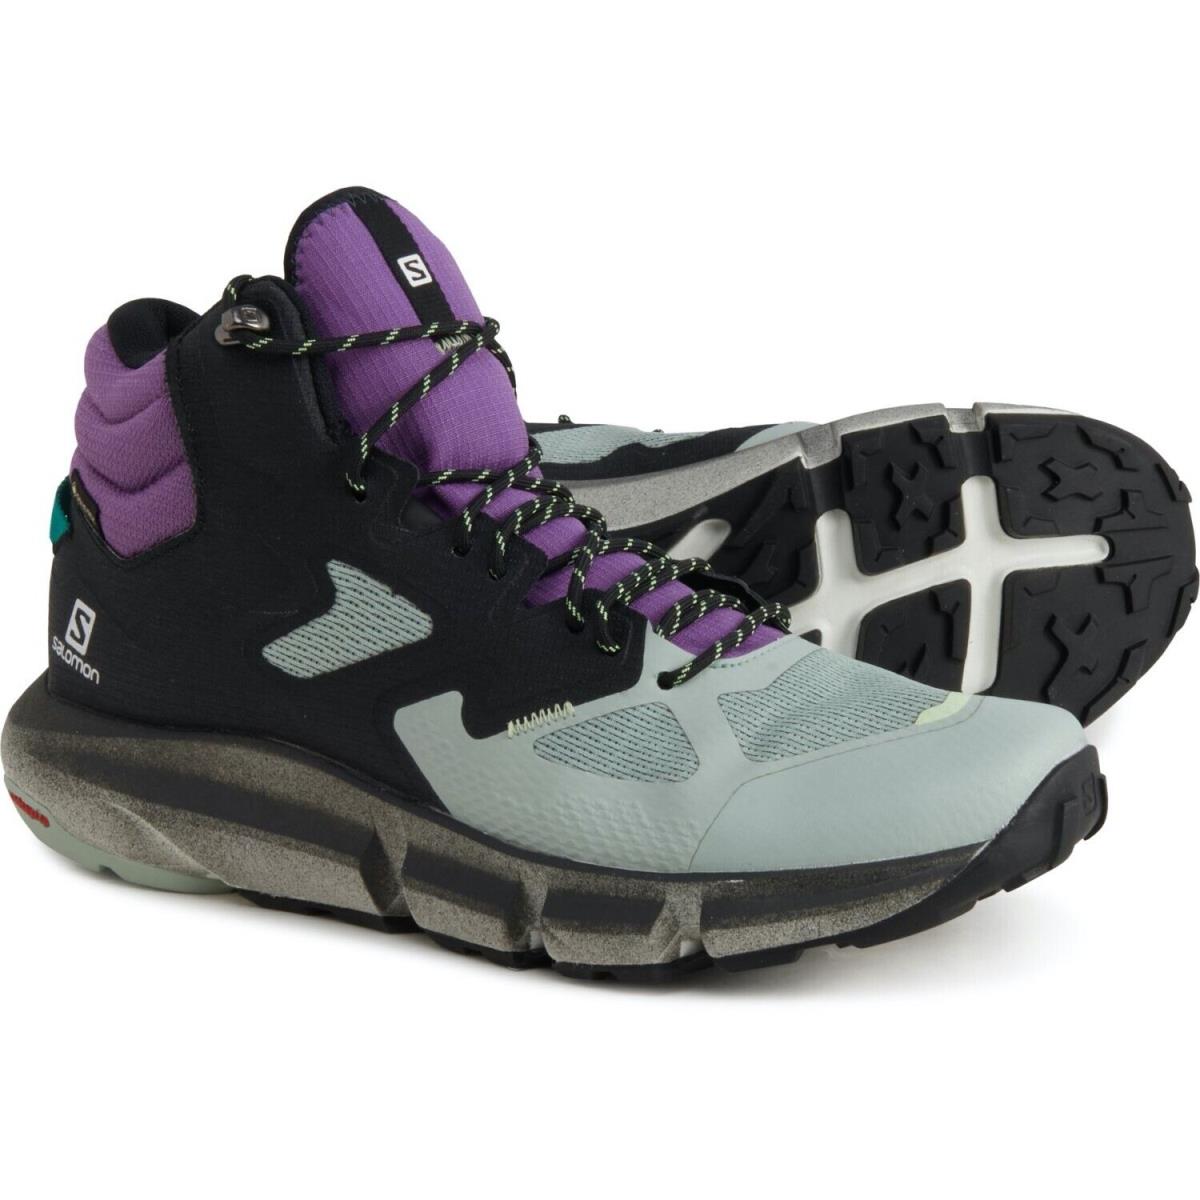 Salomon Predict Hike Gtx Goretex Waterproof Hiking Boot Black Grey Lilac Prpl 11